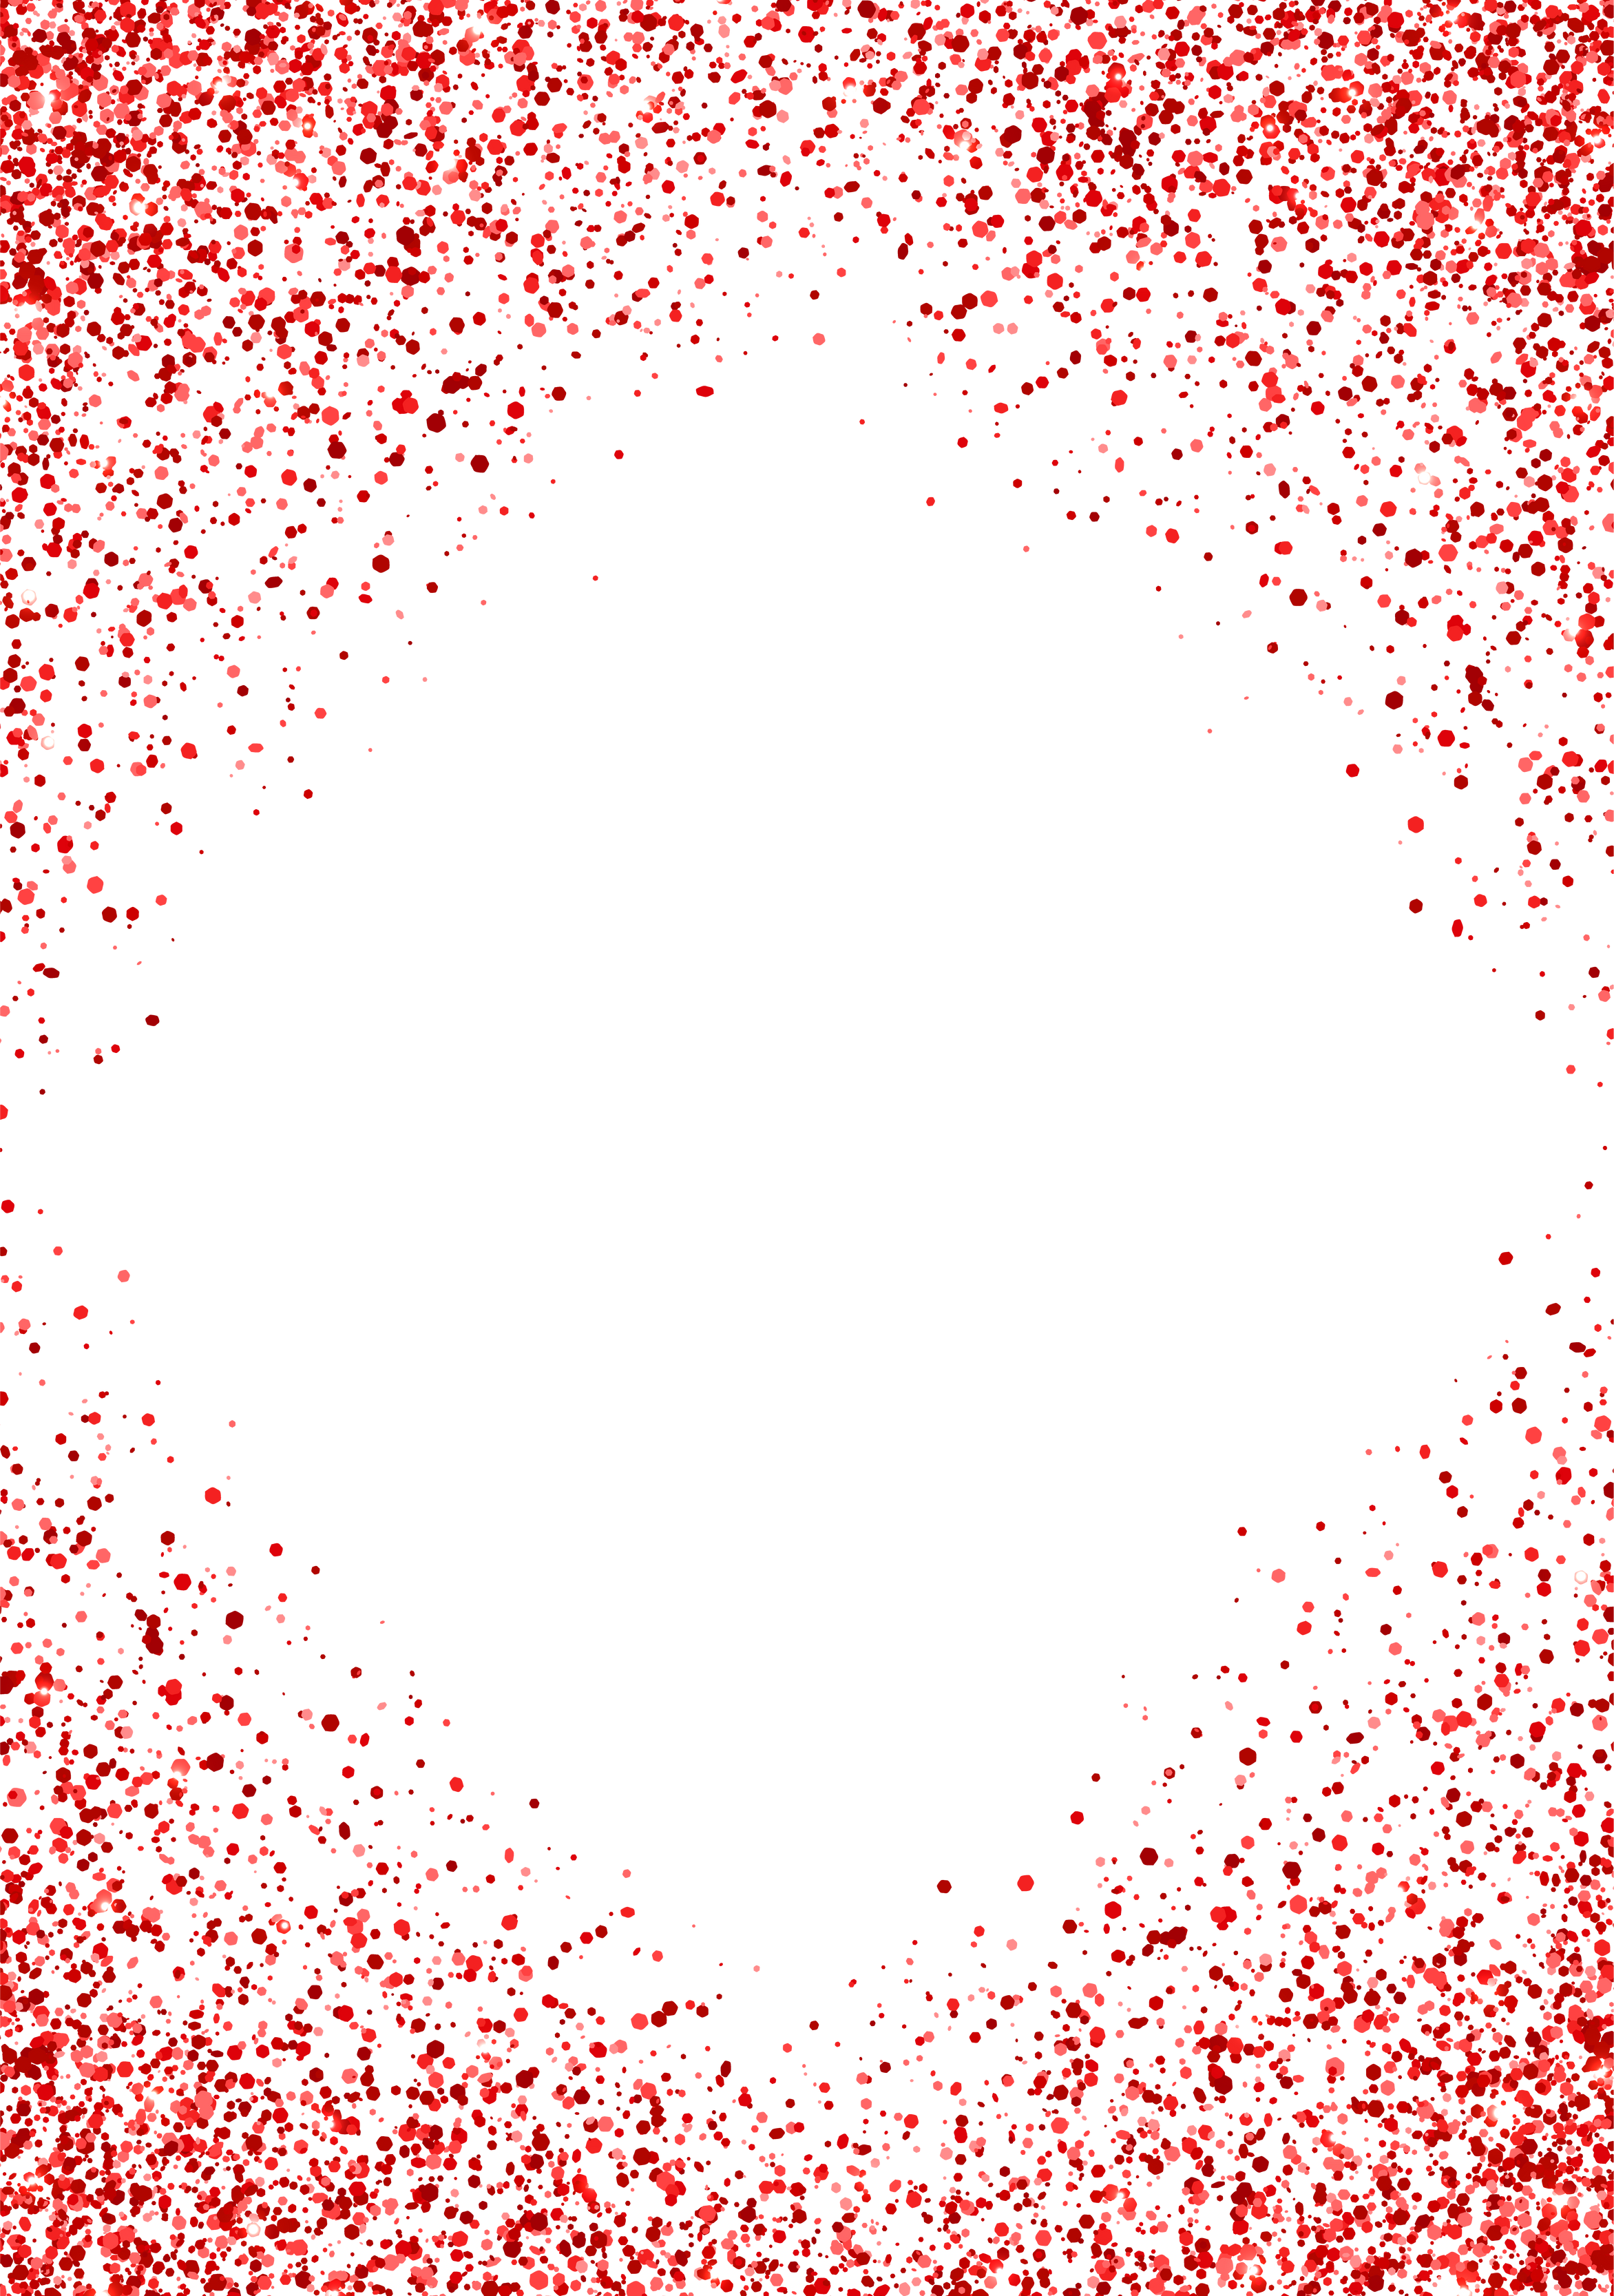 Rhomb frame sparkling red glitter